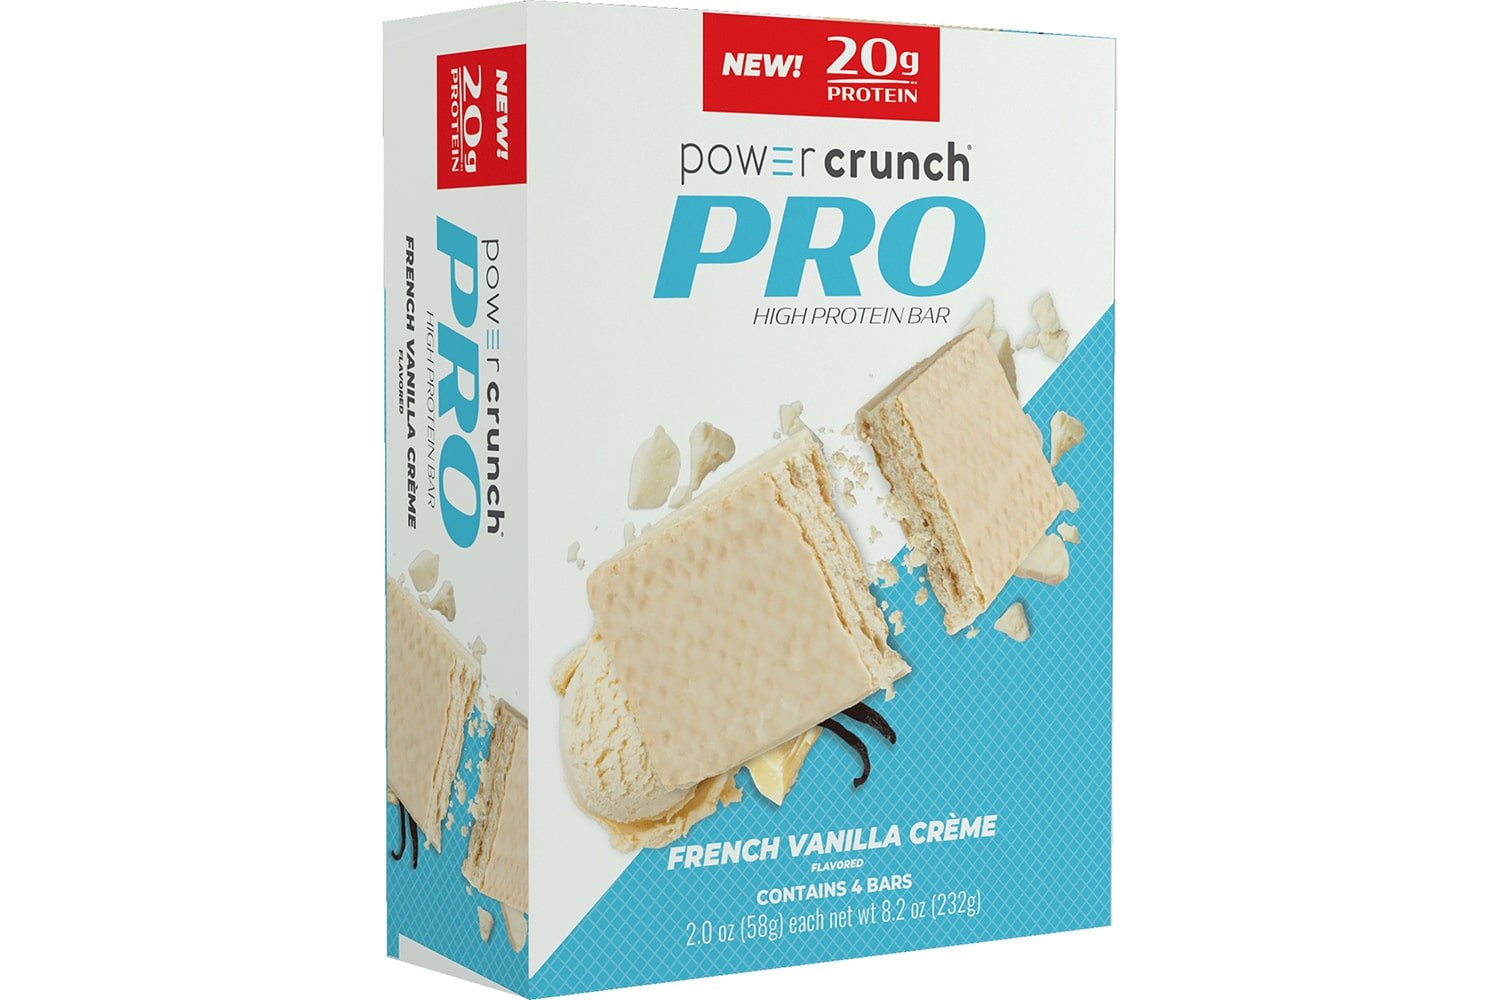 Box of Power Crunch Pro French Vanilla 20g protein bars